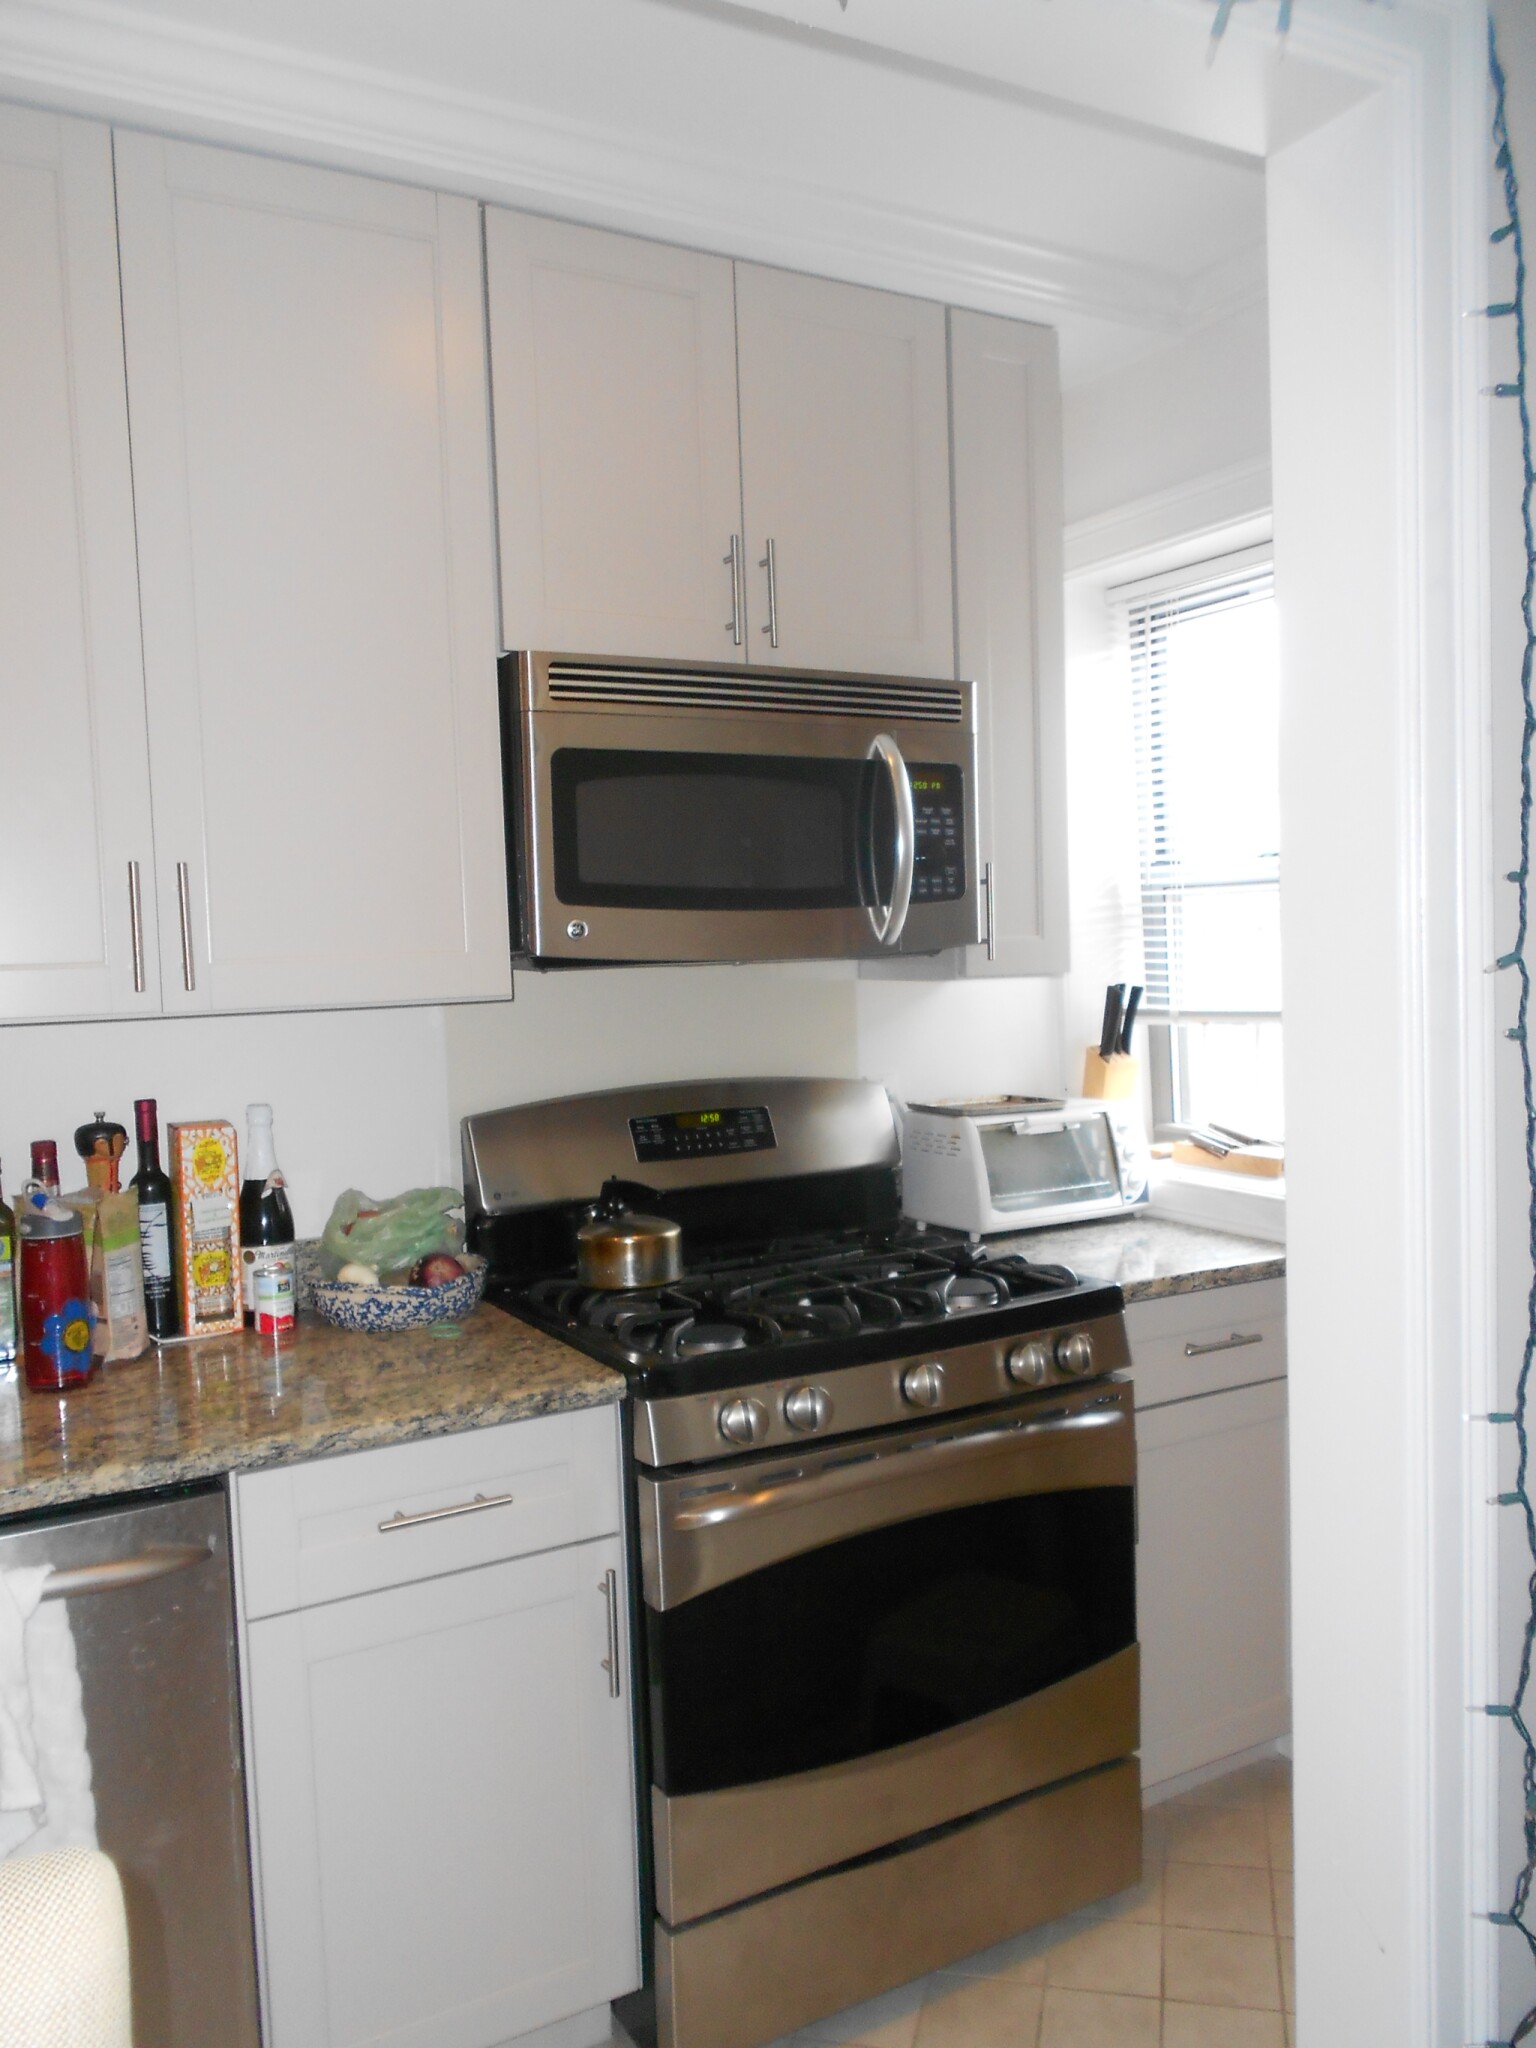 Photos of apartment on Huntington,Boston MA 02115